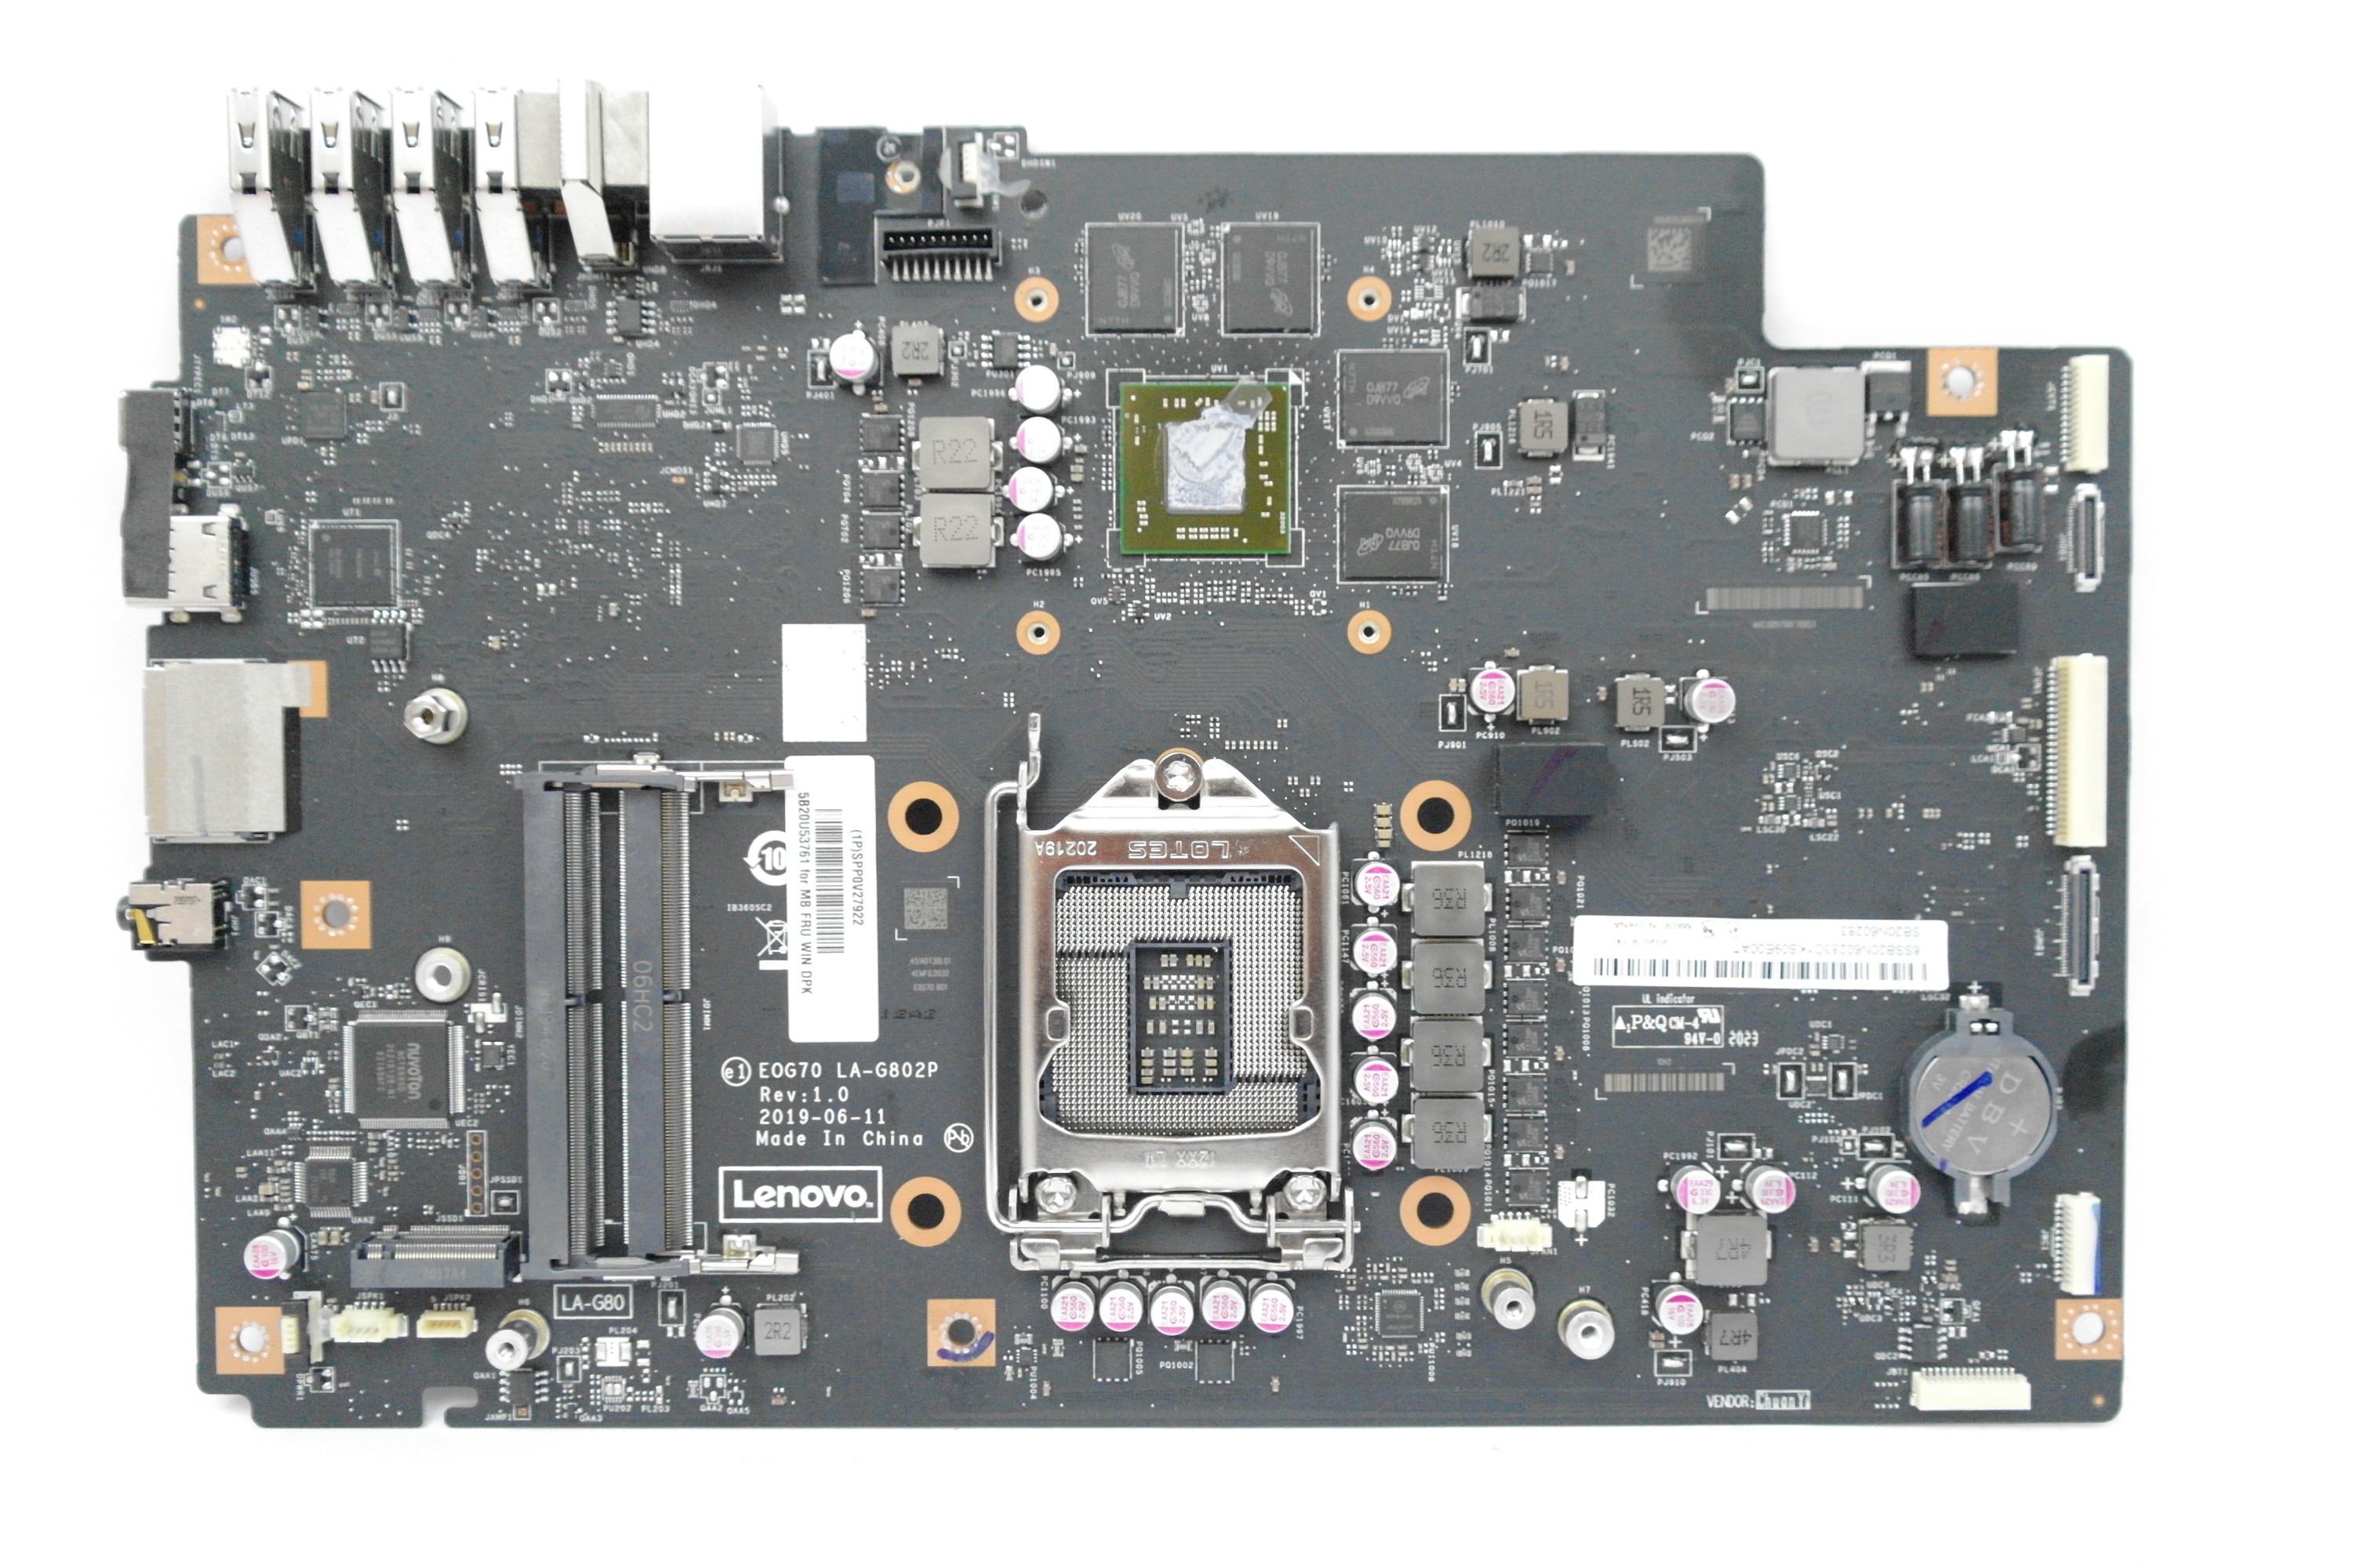 Motherboard 5B20U53761 EOG70 LA-G802P for Lenovo Yoga A940 - has issue